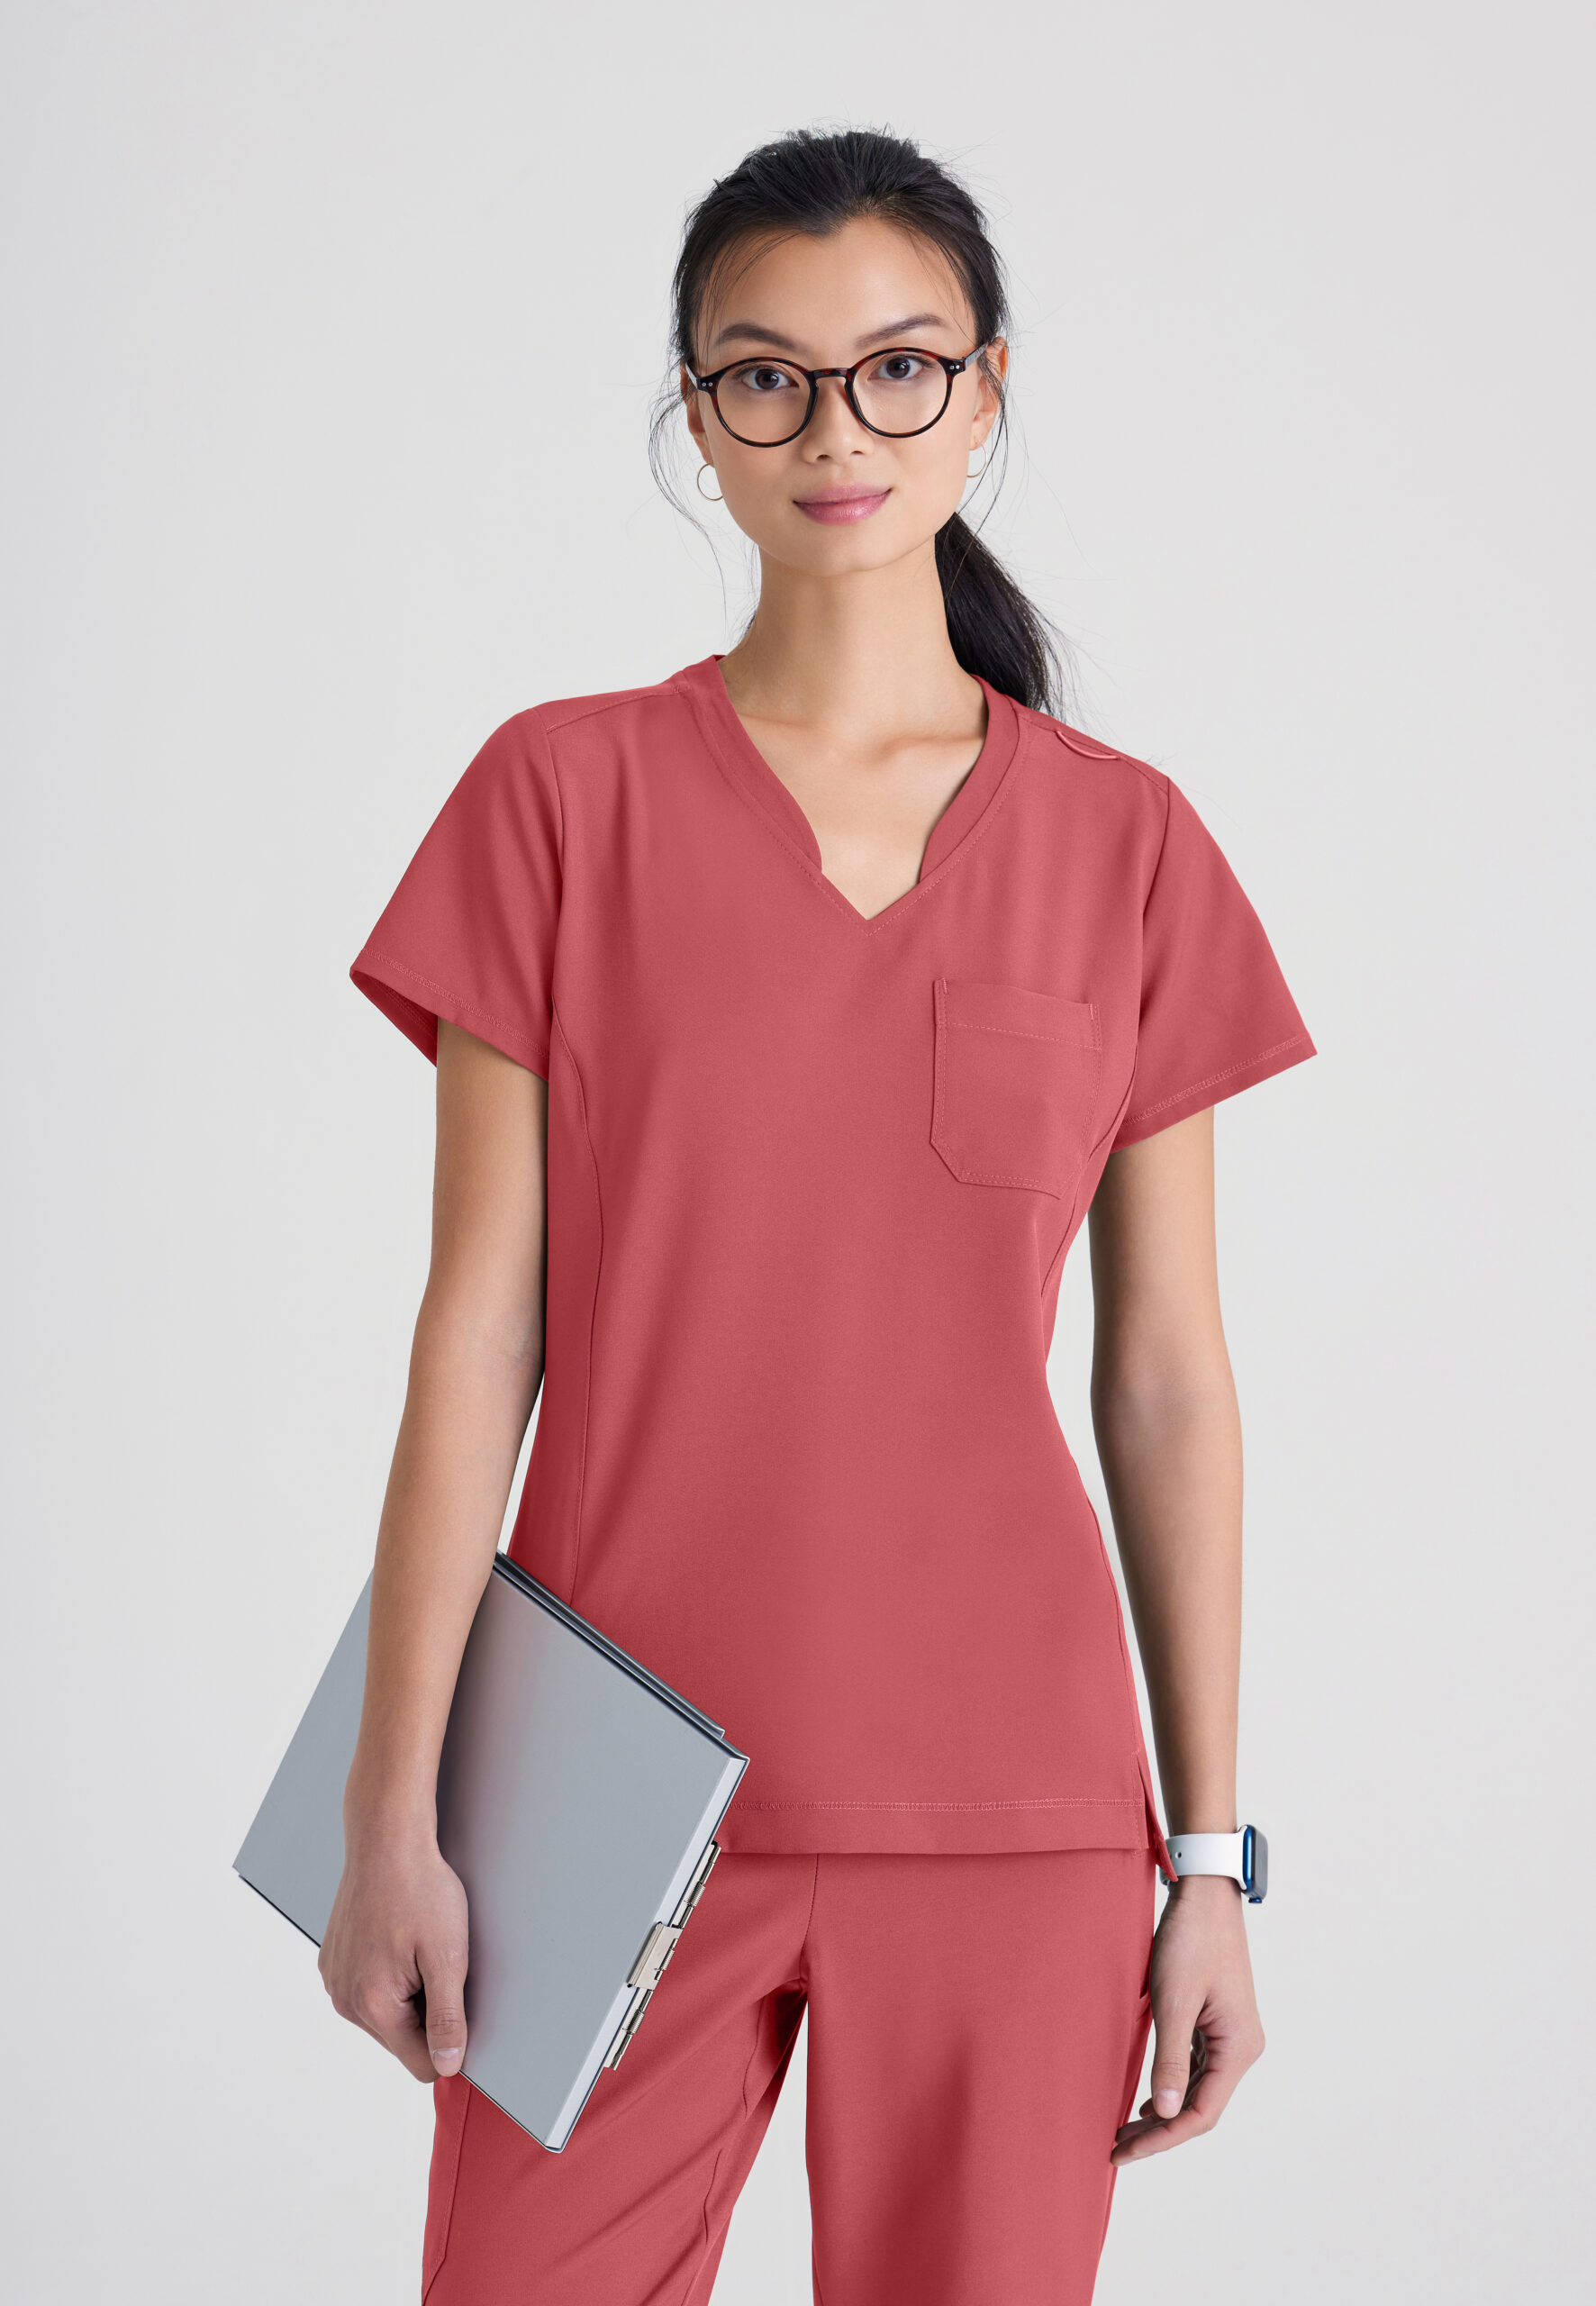 Hot Sales Nurse Uniform Women Short Sleeve Neck Tops Working